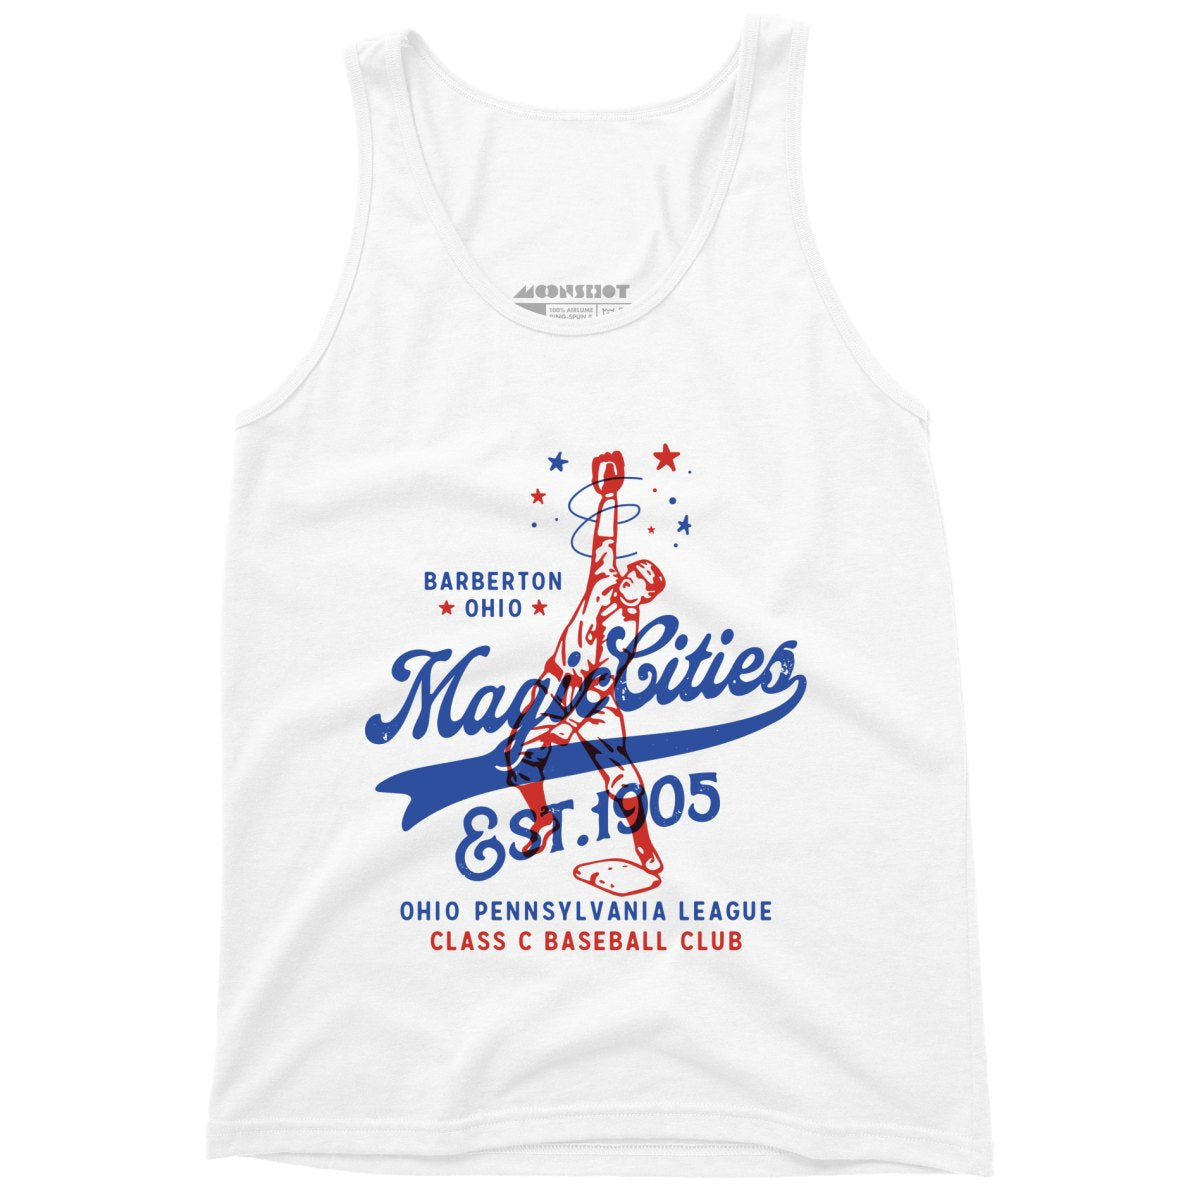 Barberton Magic Cities - Ohio - Vintage Defunct Baseball Teams - Unisex Tank Top